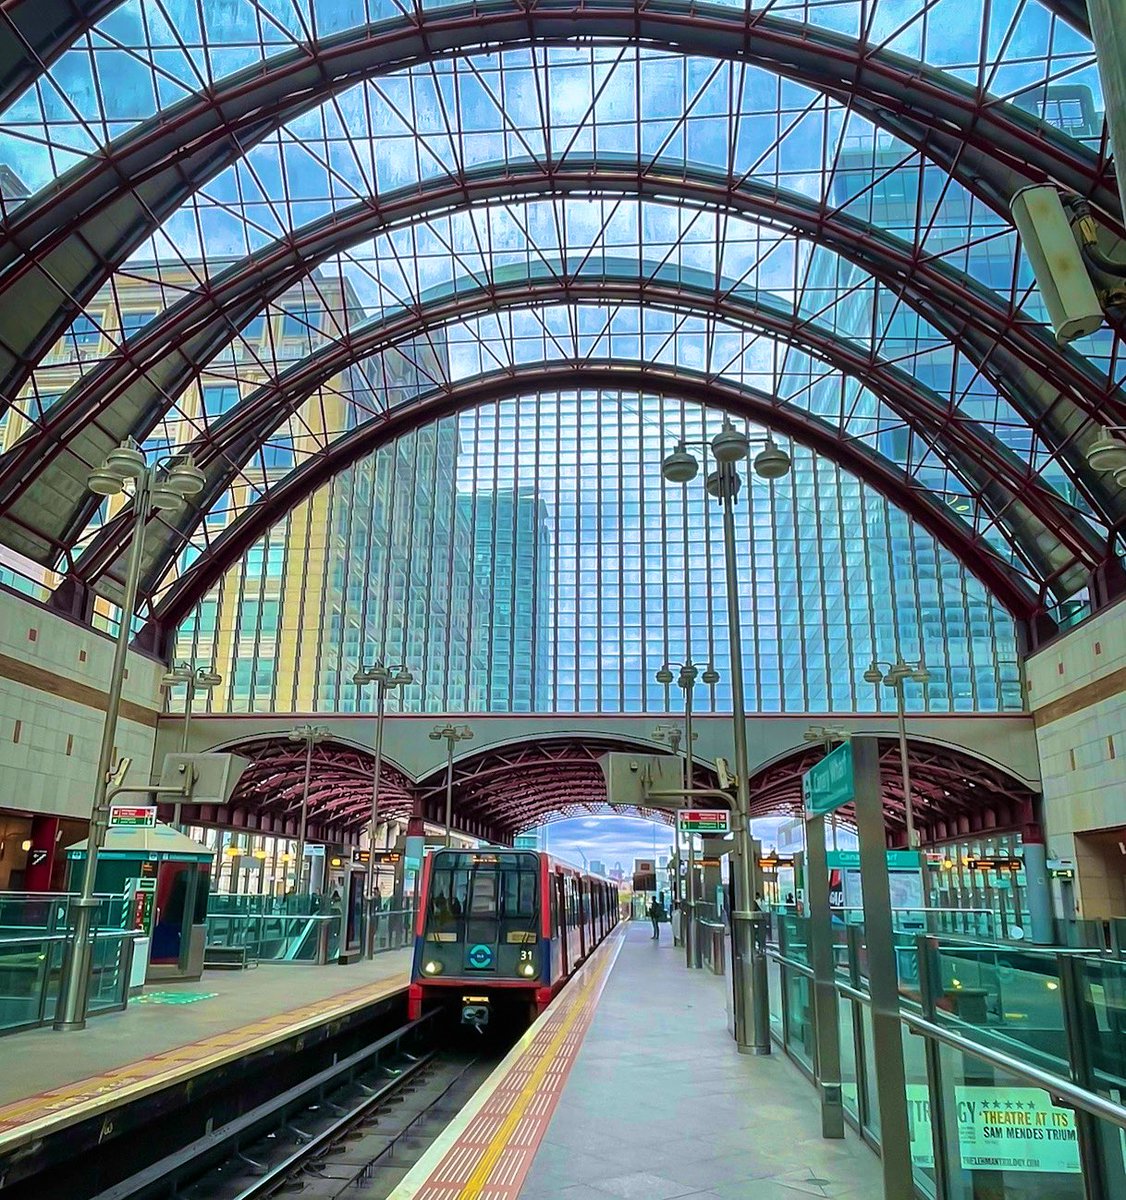 Trains in glass houses.

#london 
#docklandslightrailway 
#railways 
#transportation 
#canarywharf 
#photo 
#photography